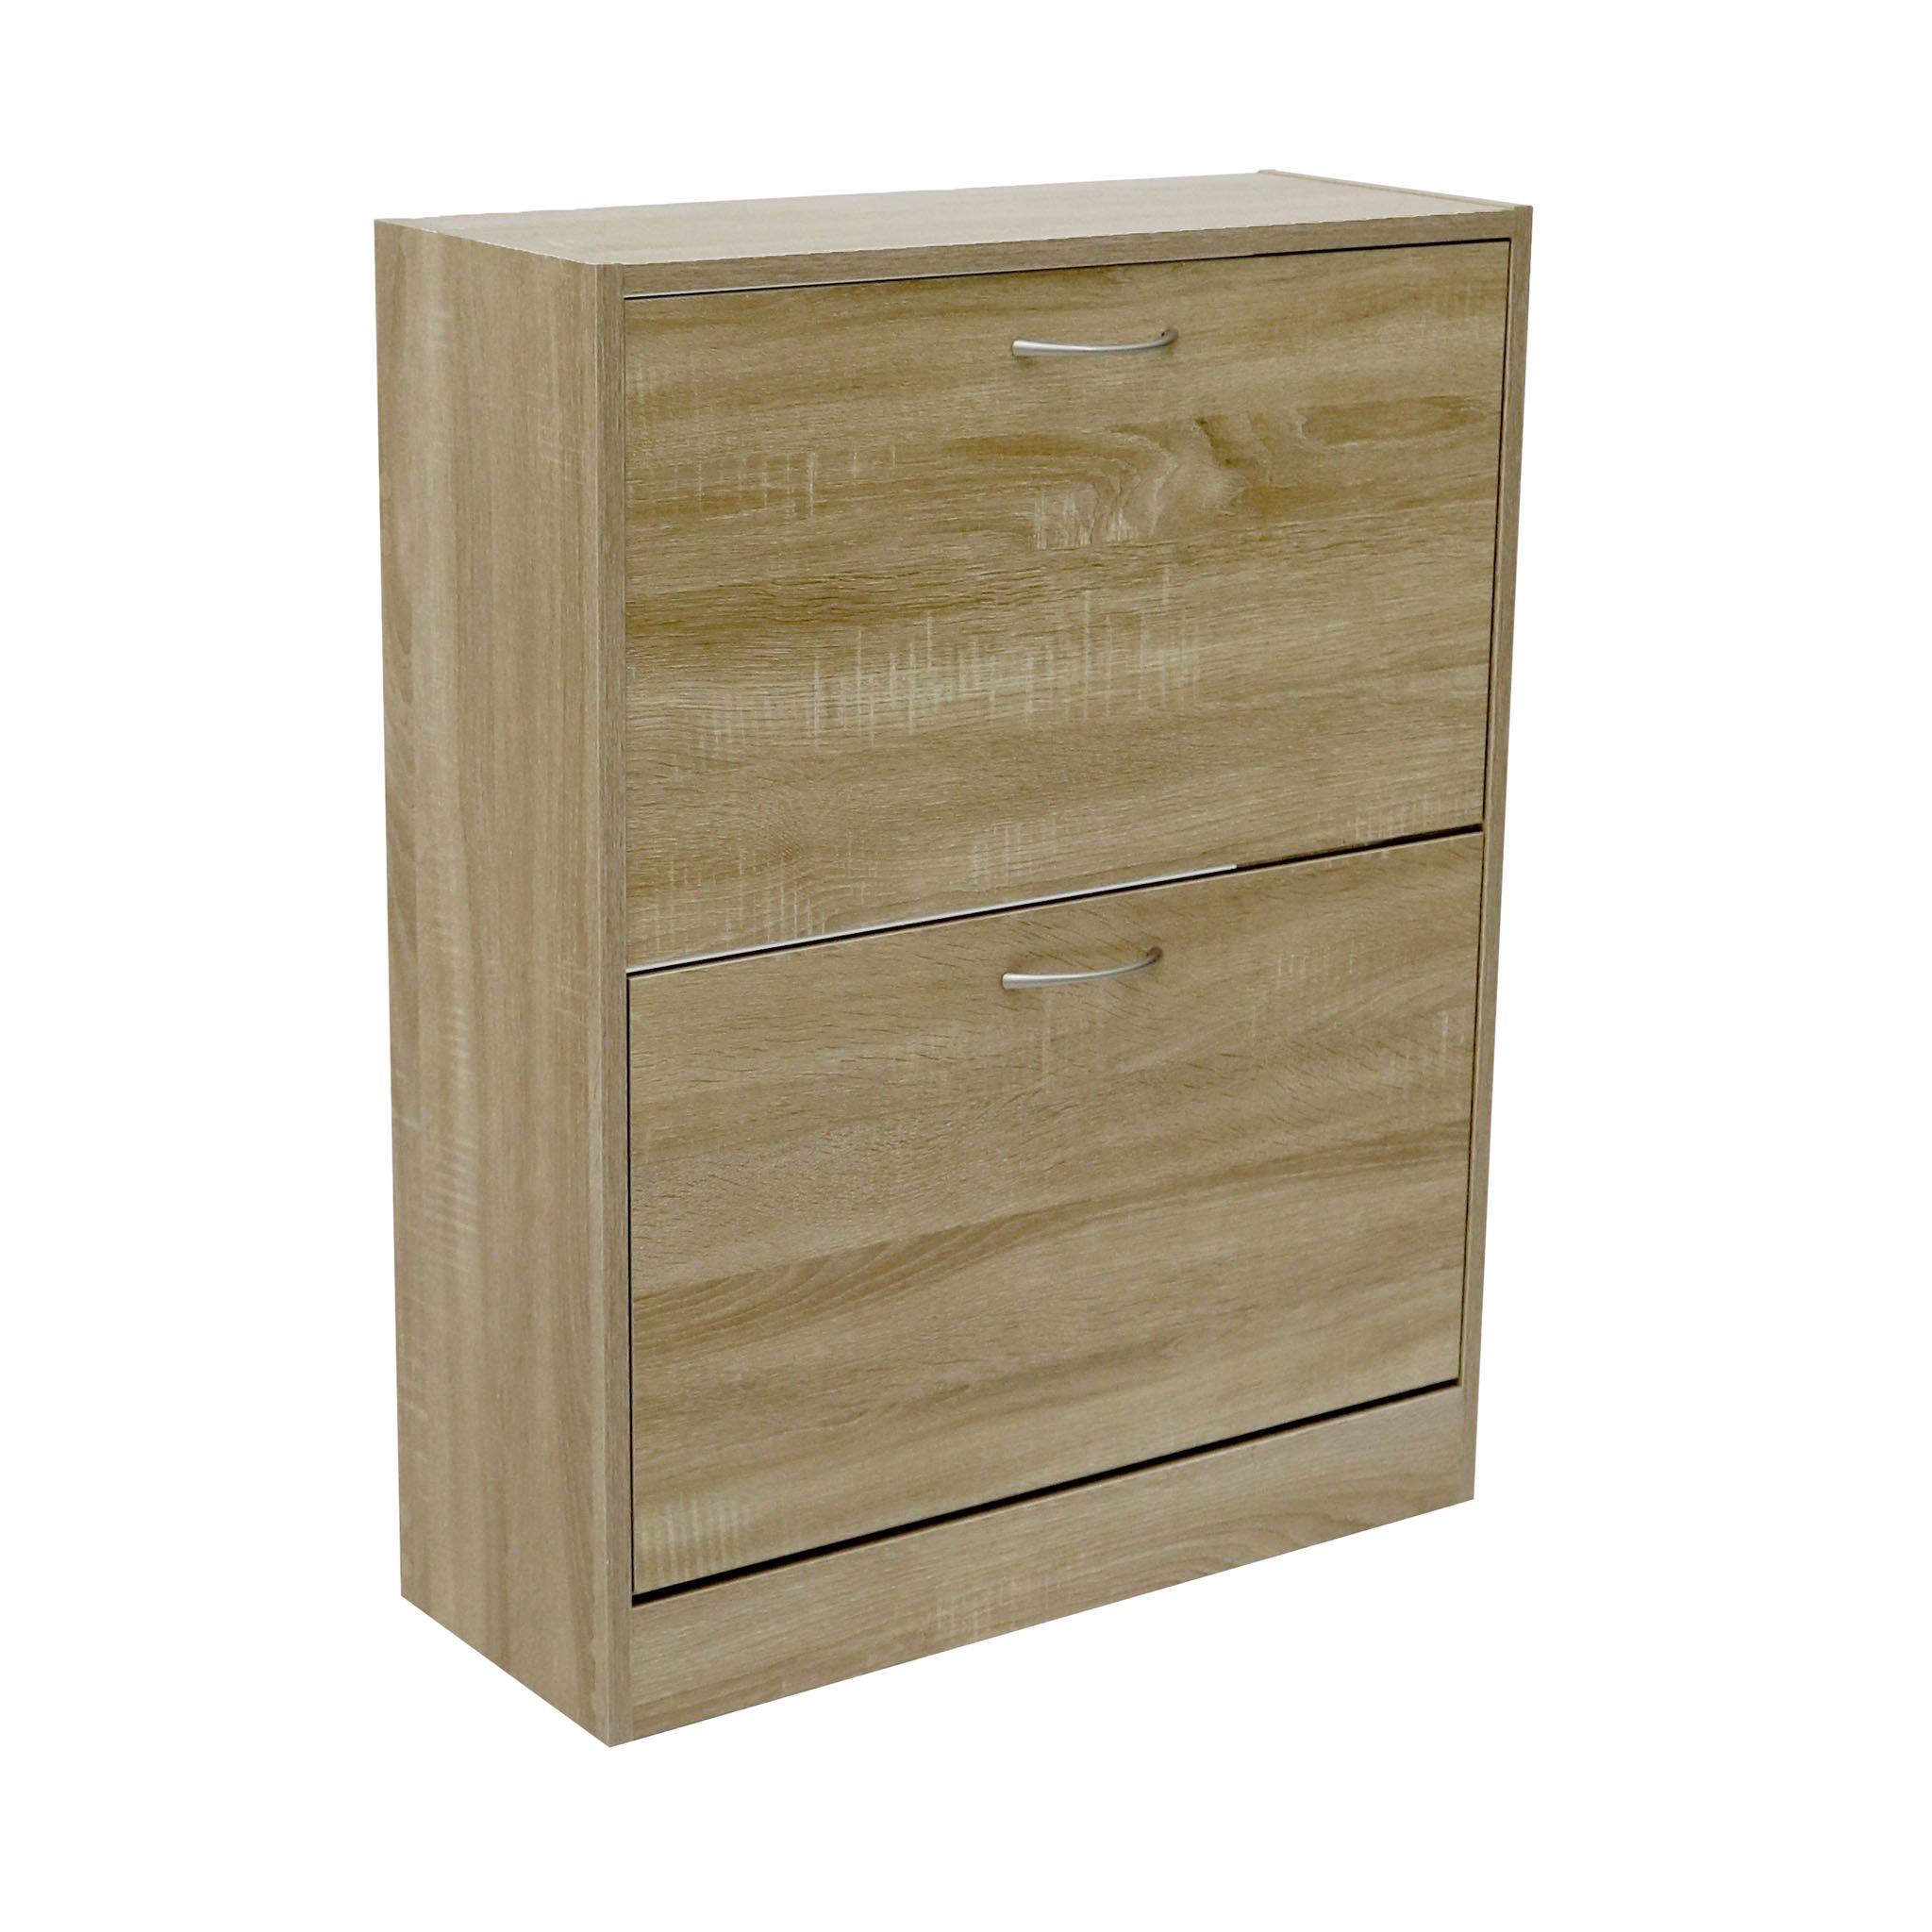 2 Drawer Oak Effect Shoe Storage Cupboard Cabinet Furniture